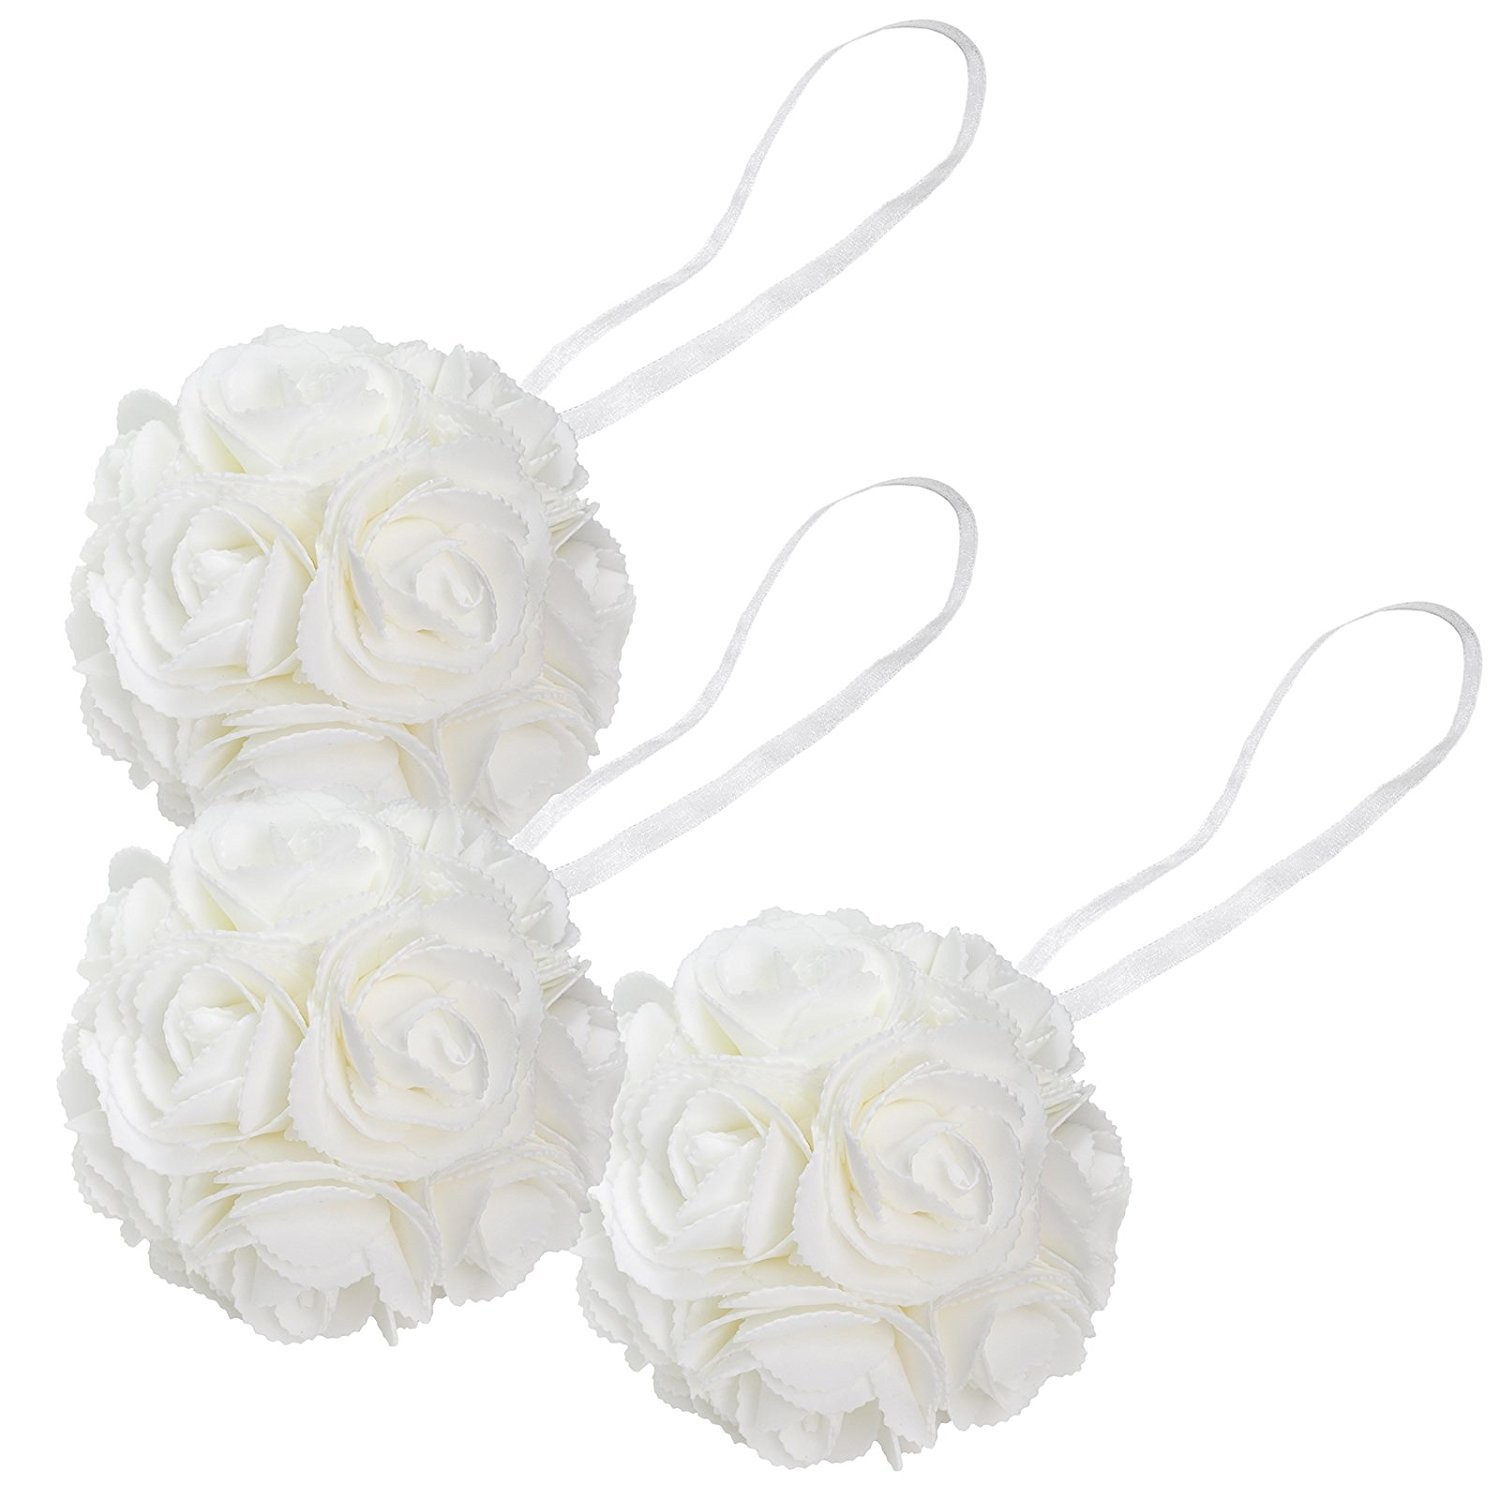 3 Pack 8" Kissing Ball Wedding Decoration Rose Pomander Ivory Flower Centerpiece 